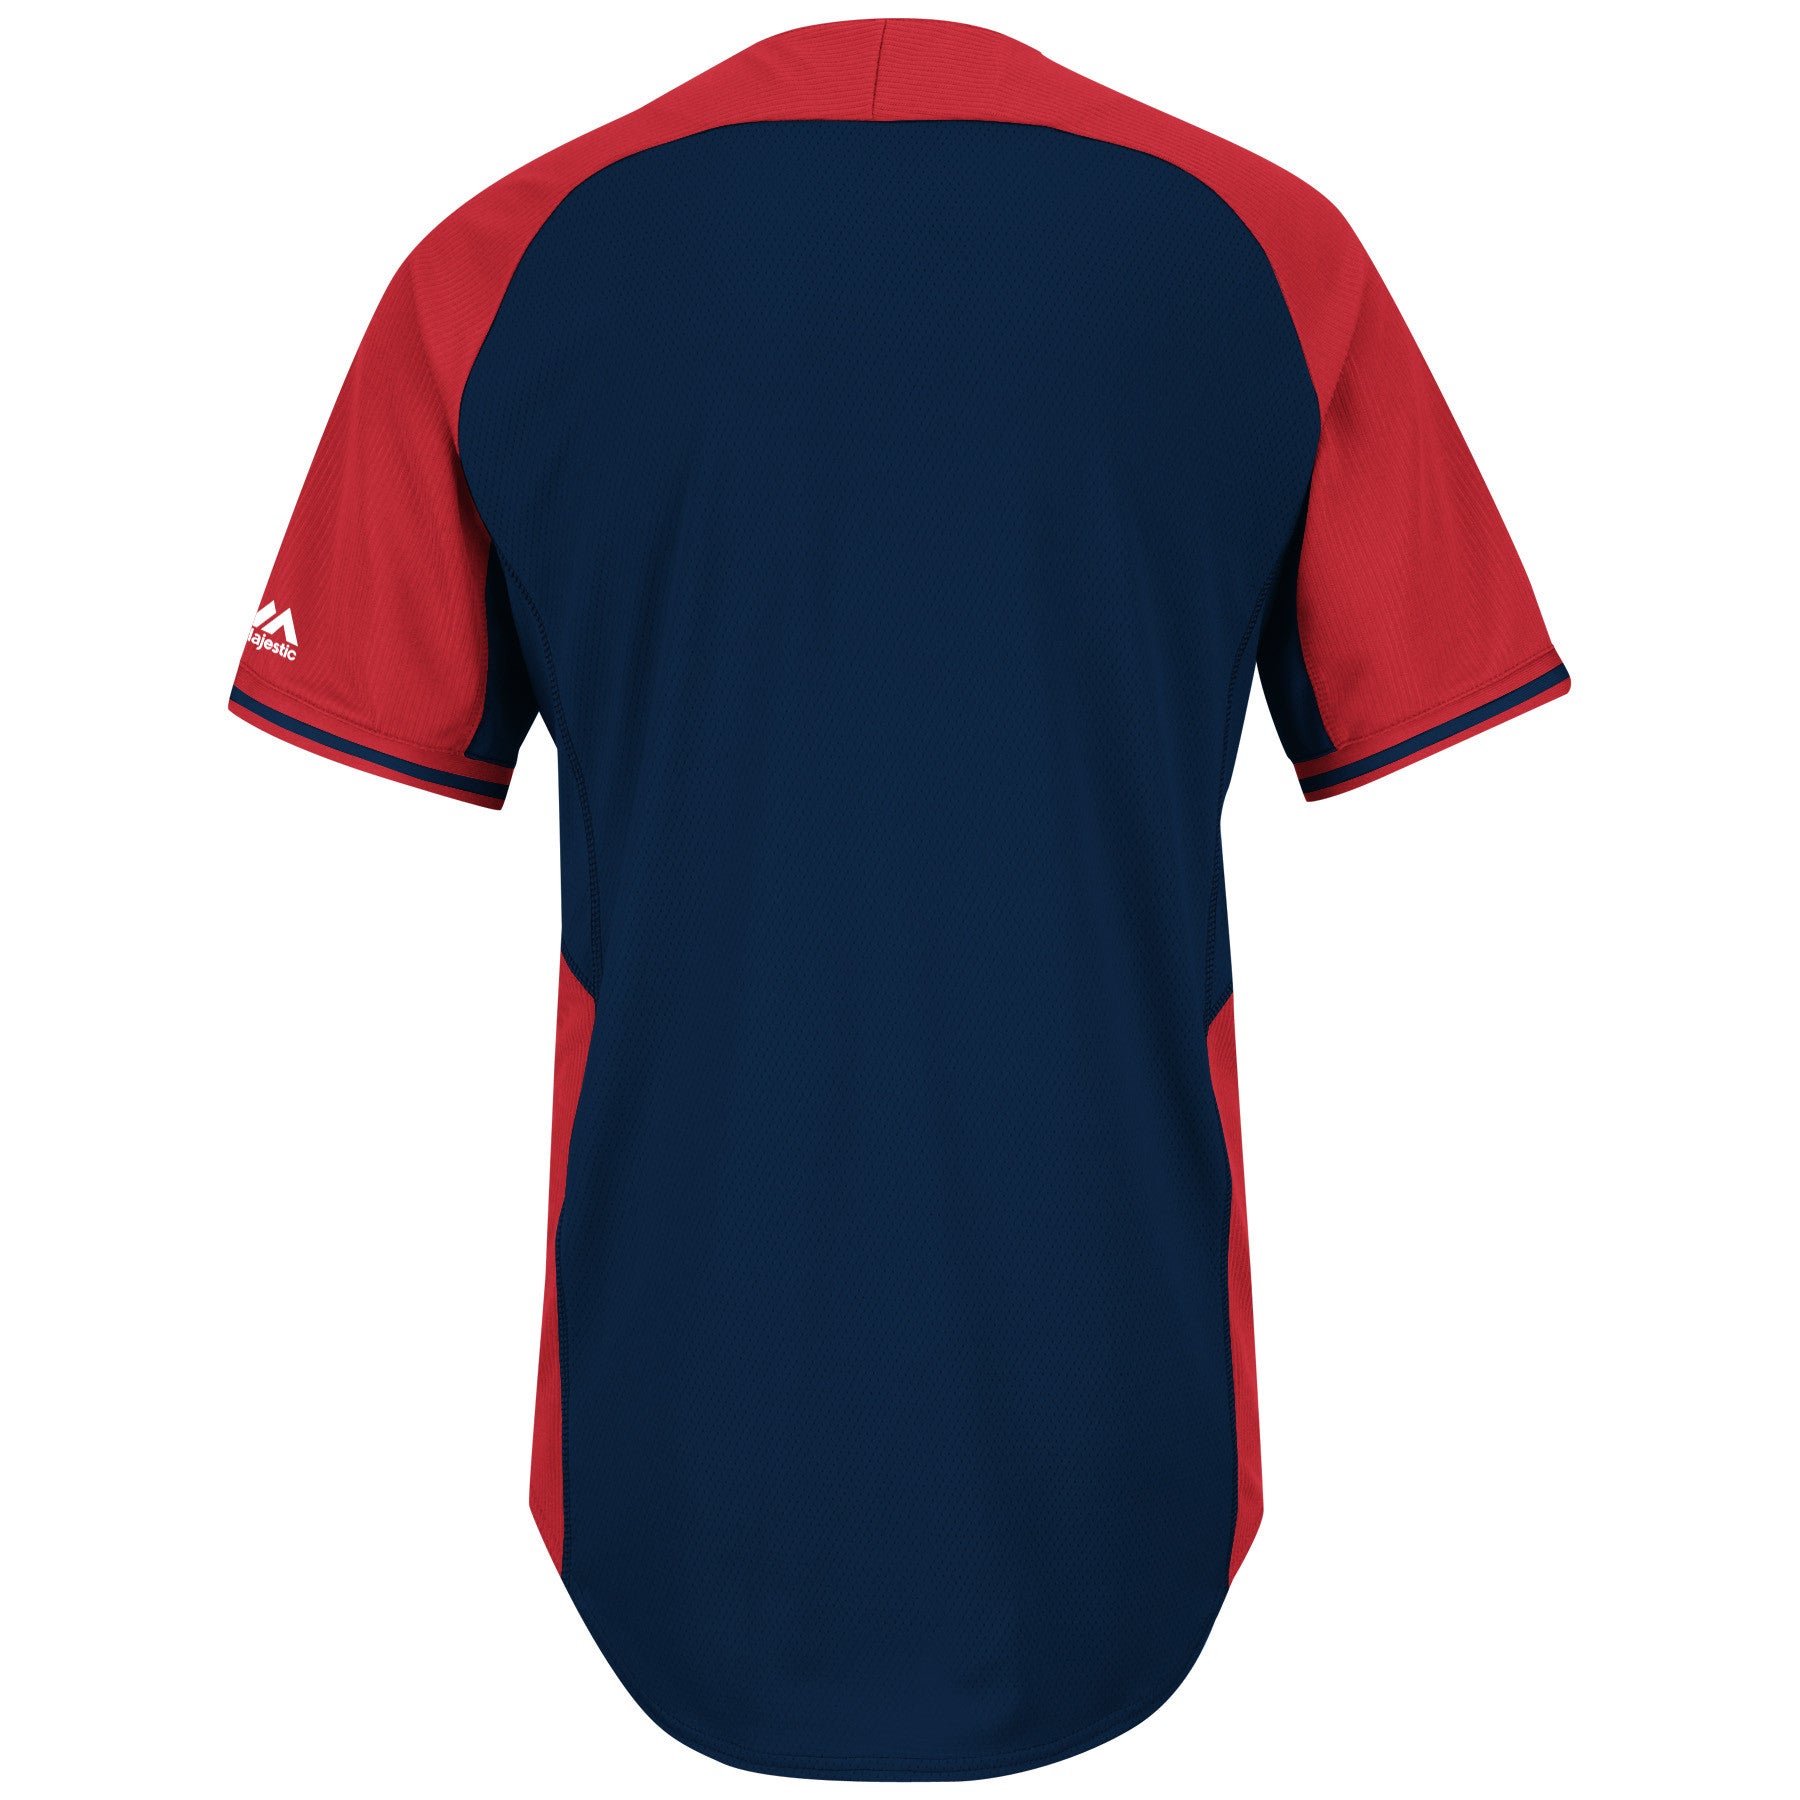 Saxoimage Saint Louis Cardinals Shirt - Black - Sizes Up to XXXXL